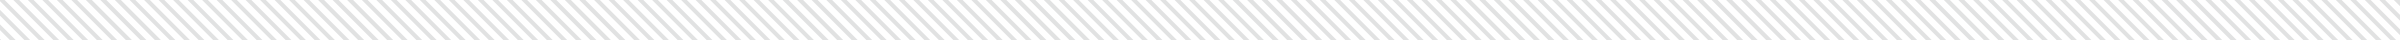 w-angle-pattern-bar-desktop-dark